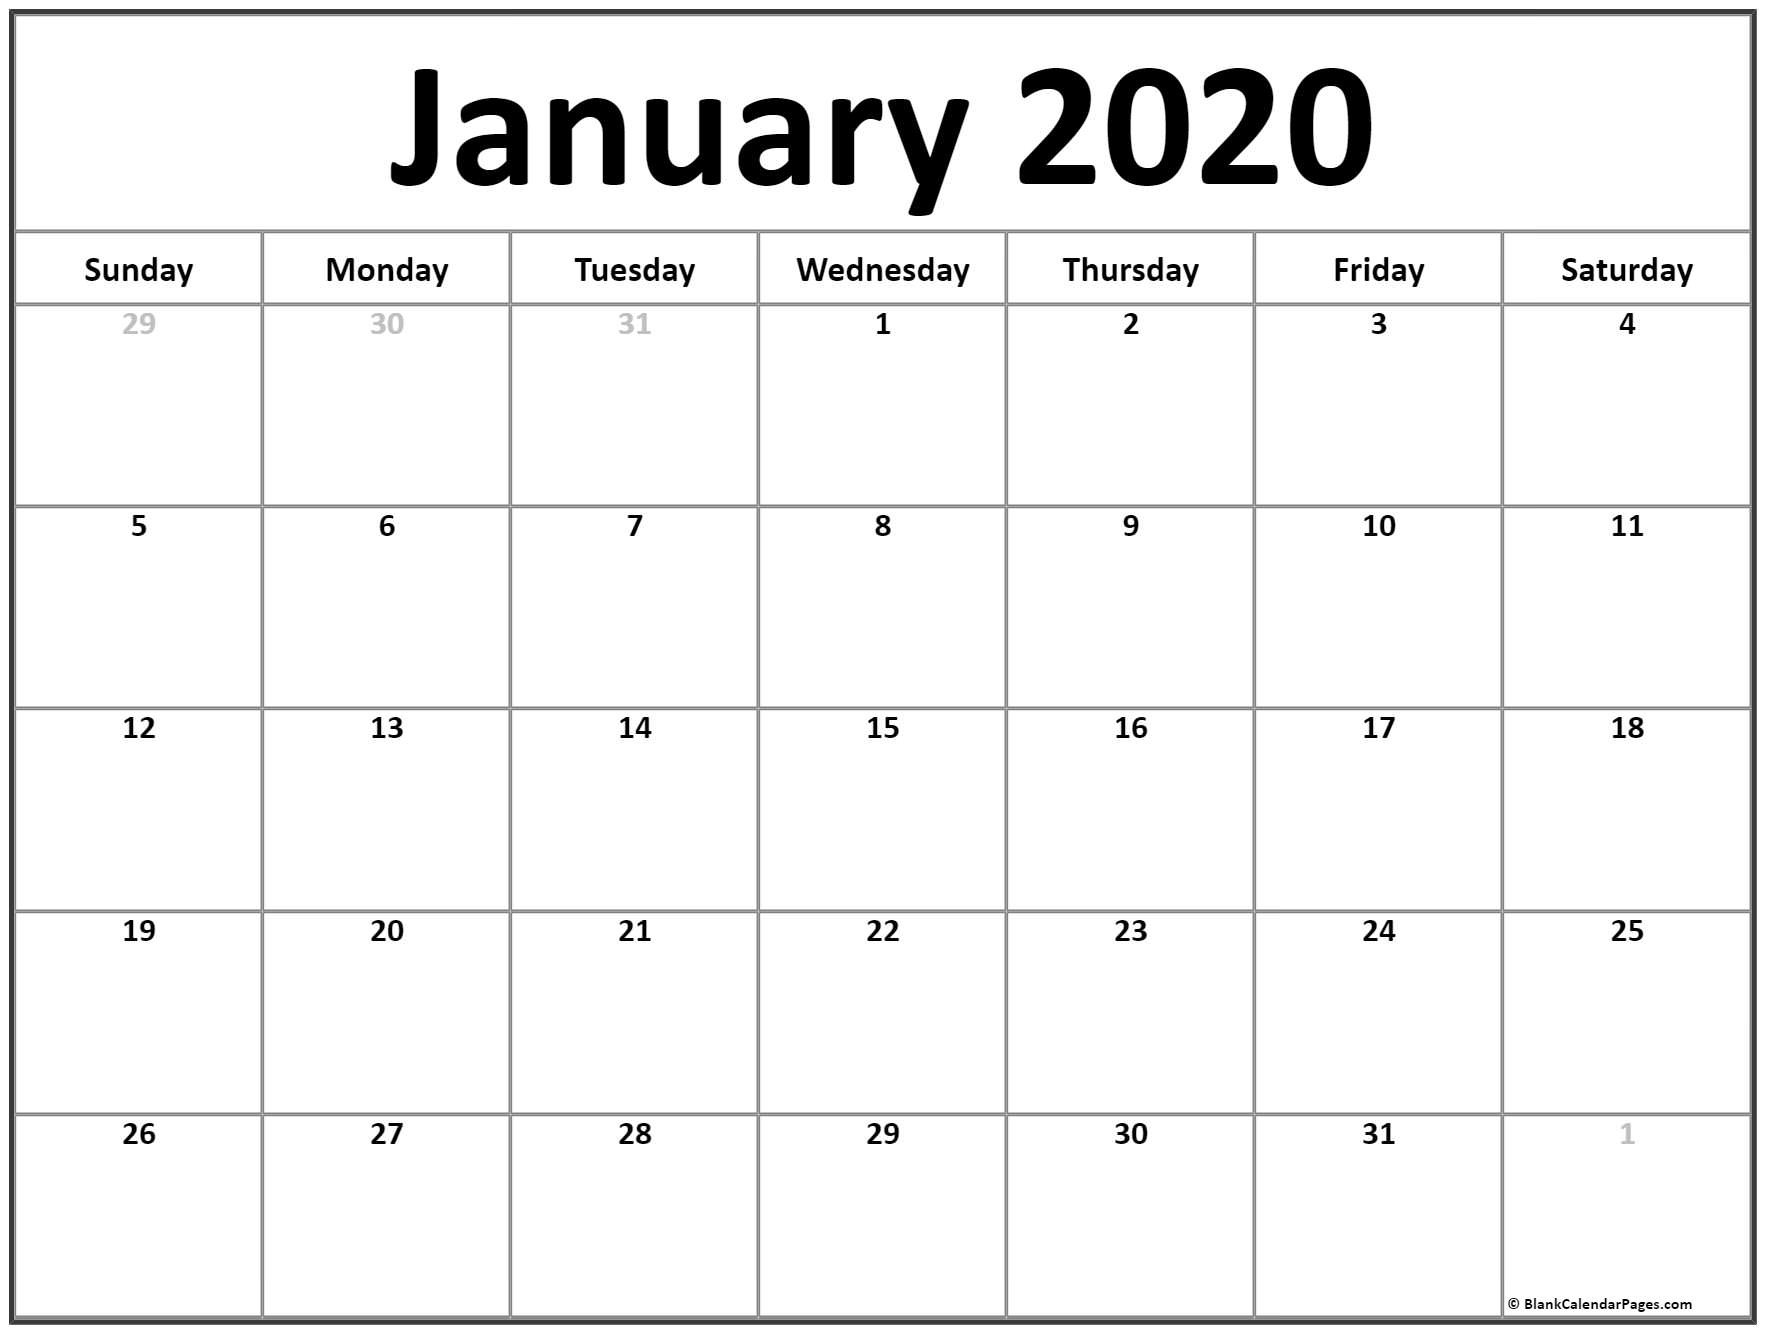 January 2020 Calendar | Free Printable Monthly Calendars-Images Of January 2020 Calendar